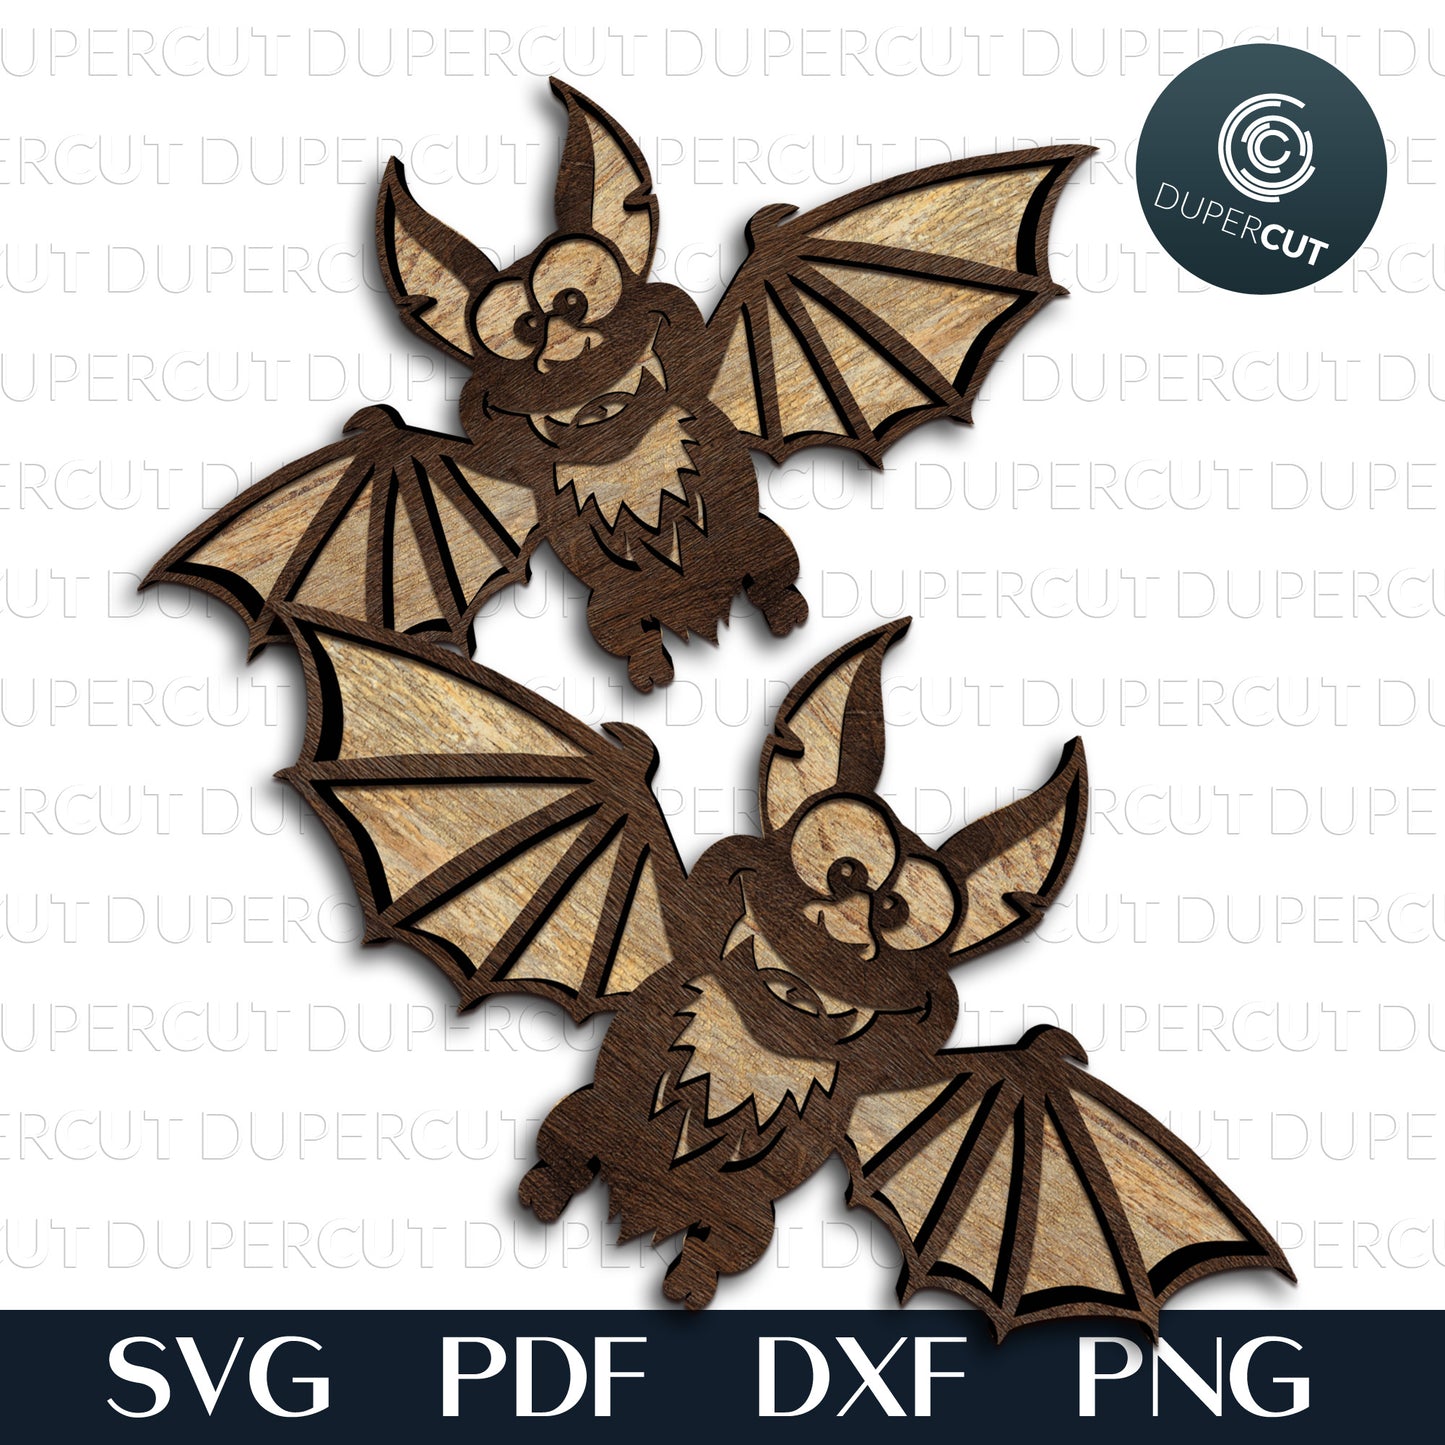 Funny bat Halloween kids decoration - SVG PDF DXF layered cutting files for laser machines, Glowrorge, Cricut, Silhouette and CNC plasma